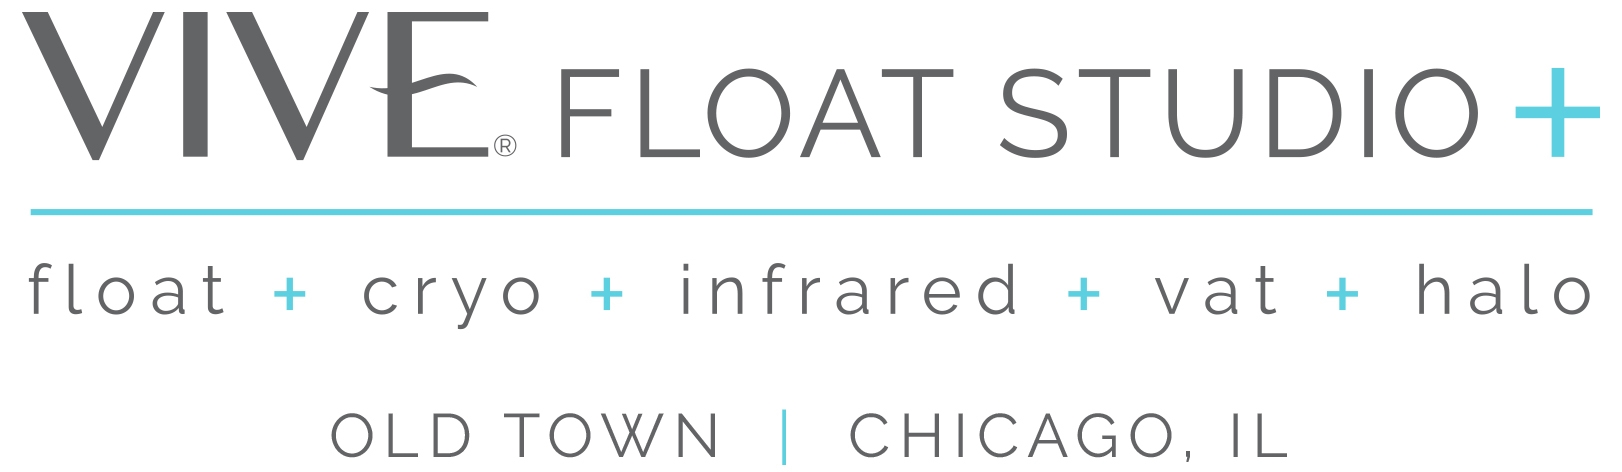 VIVE Float Studio + | Old Town - Logo